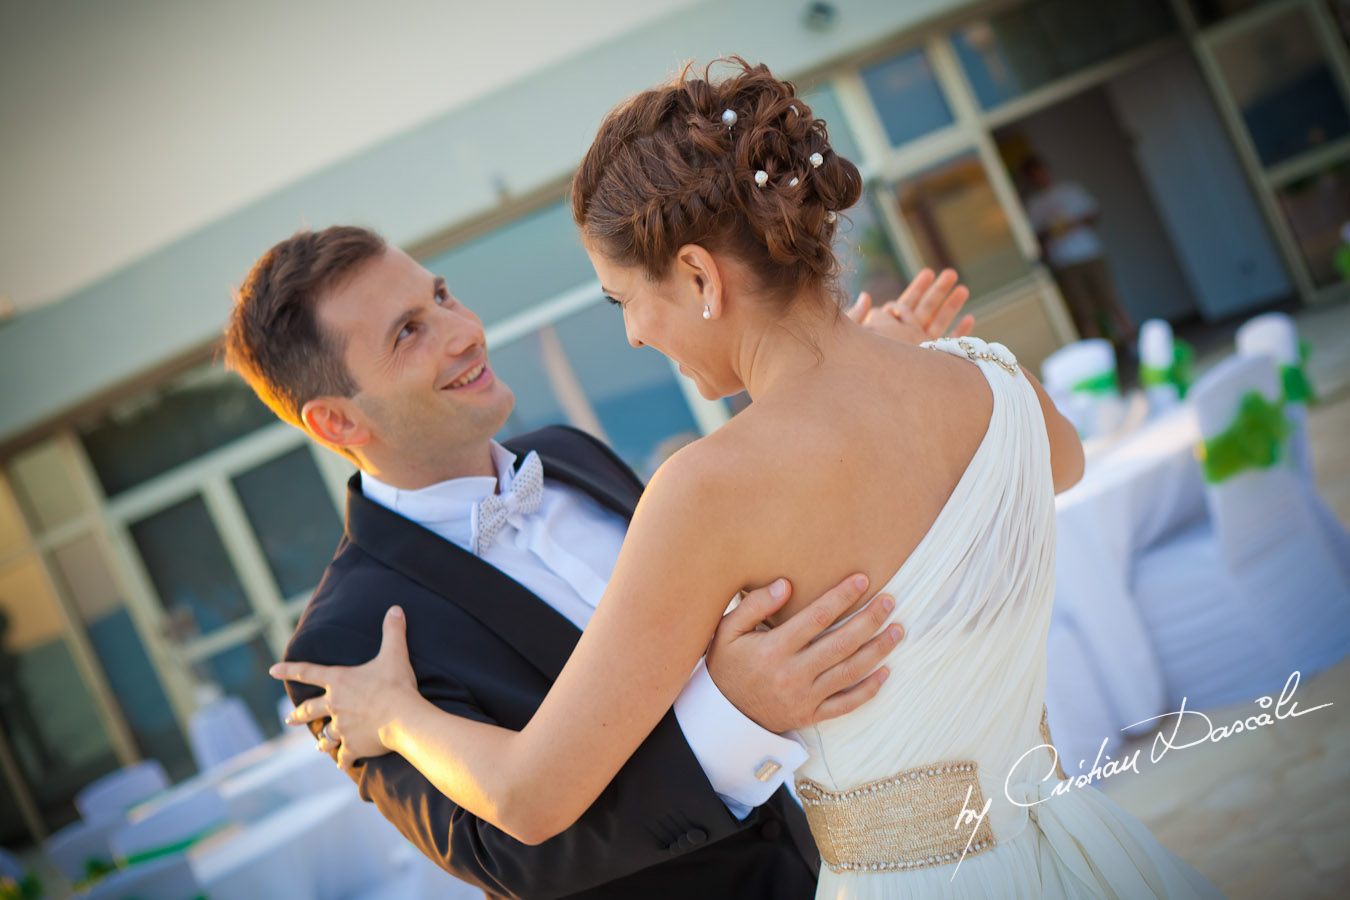 Vlad & Anca - A beautiful Wedding in Larnaka. Professional Photographer: Cristian Dascalu